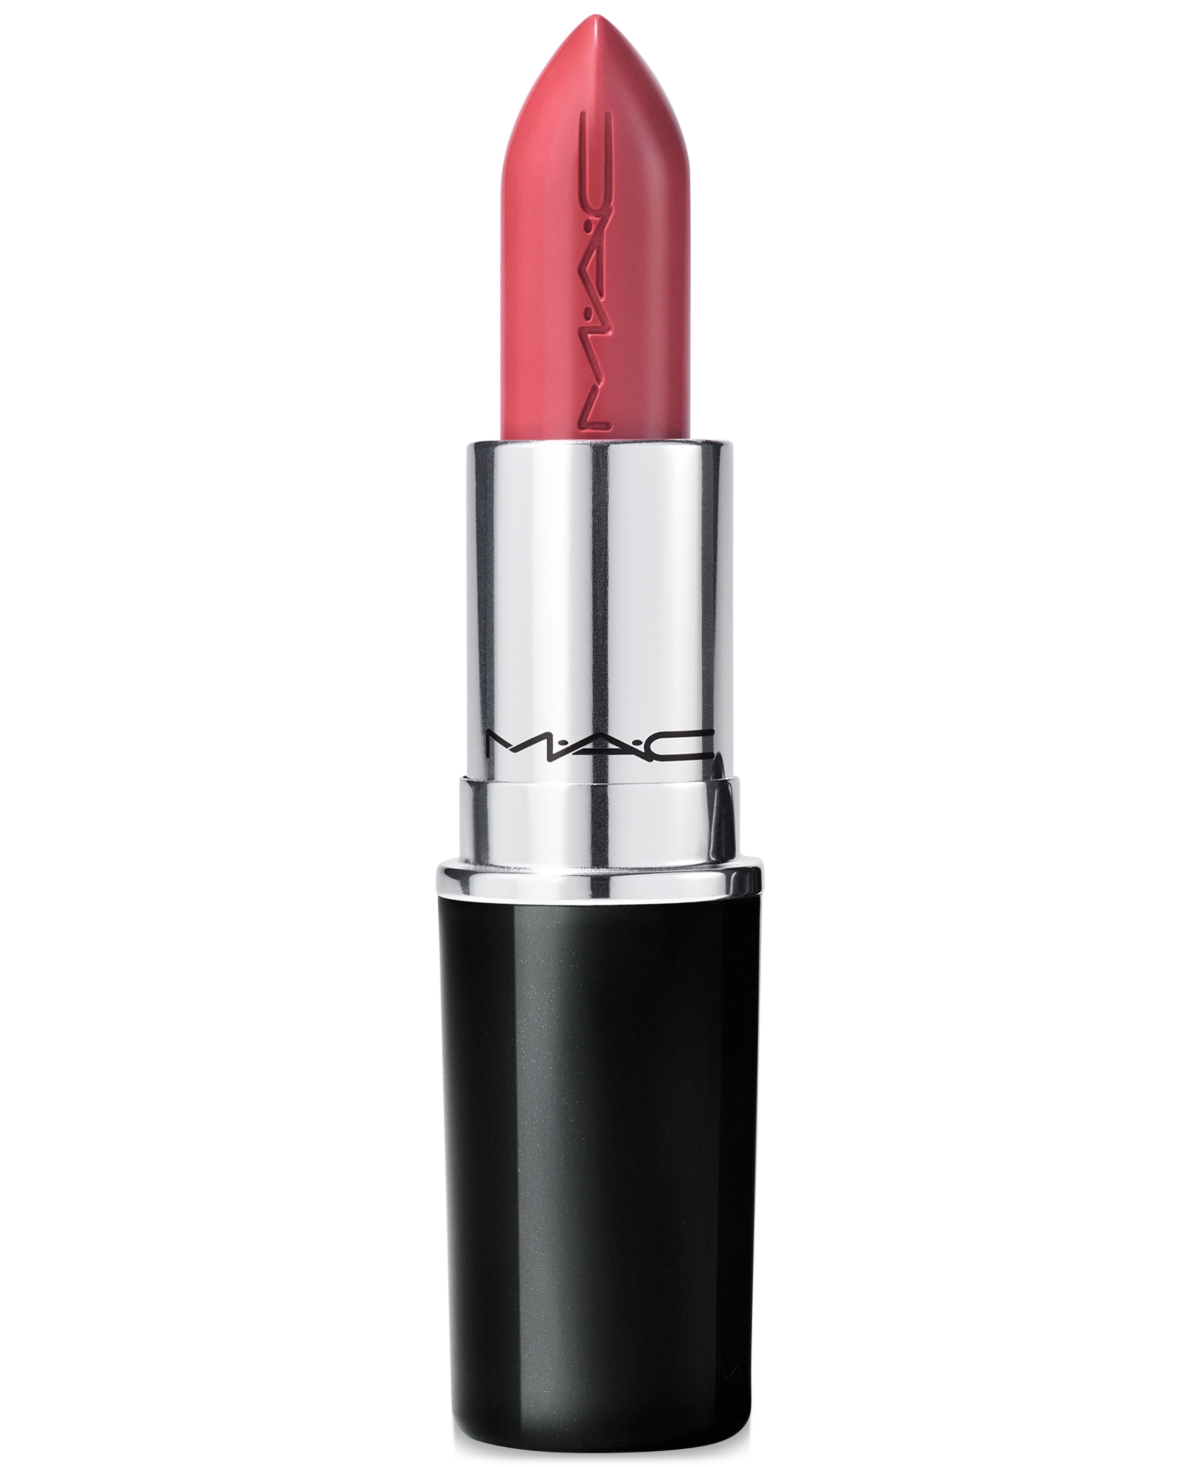 Mac Re-think Pink Lustreglass Lipstick In Frienda (midtone Coral)